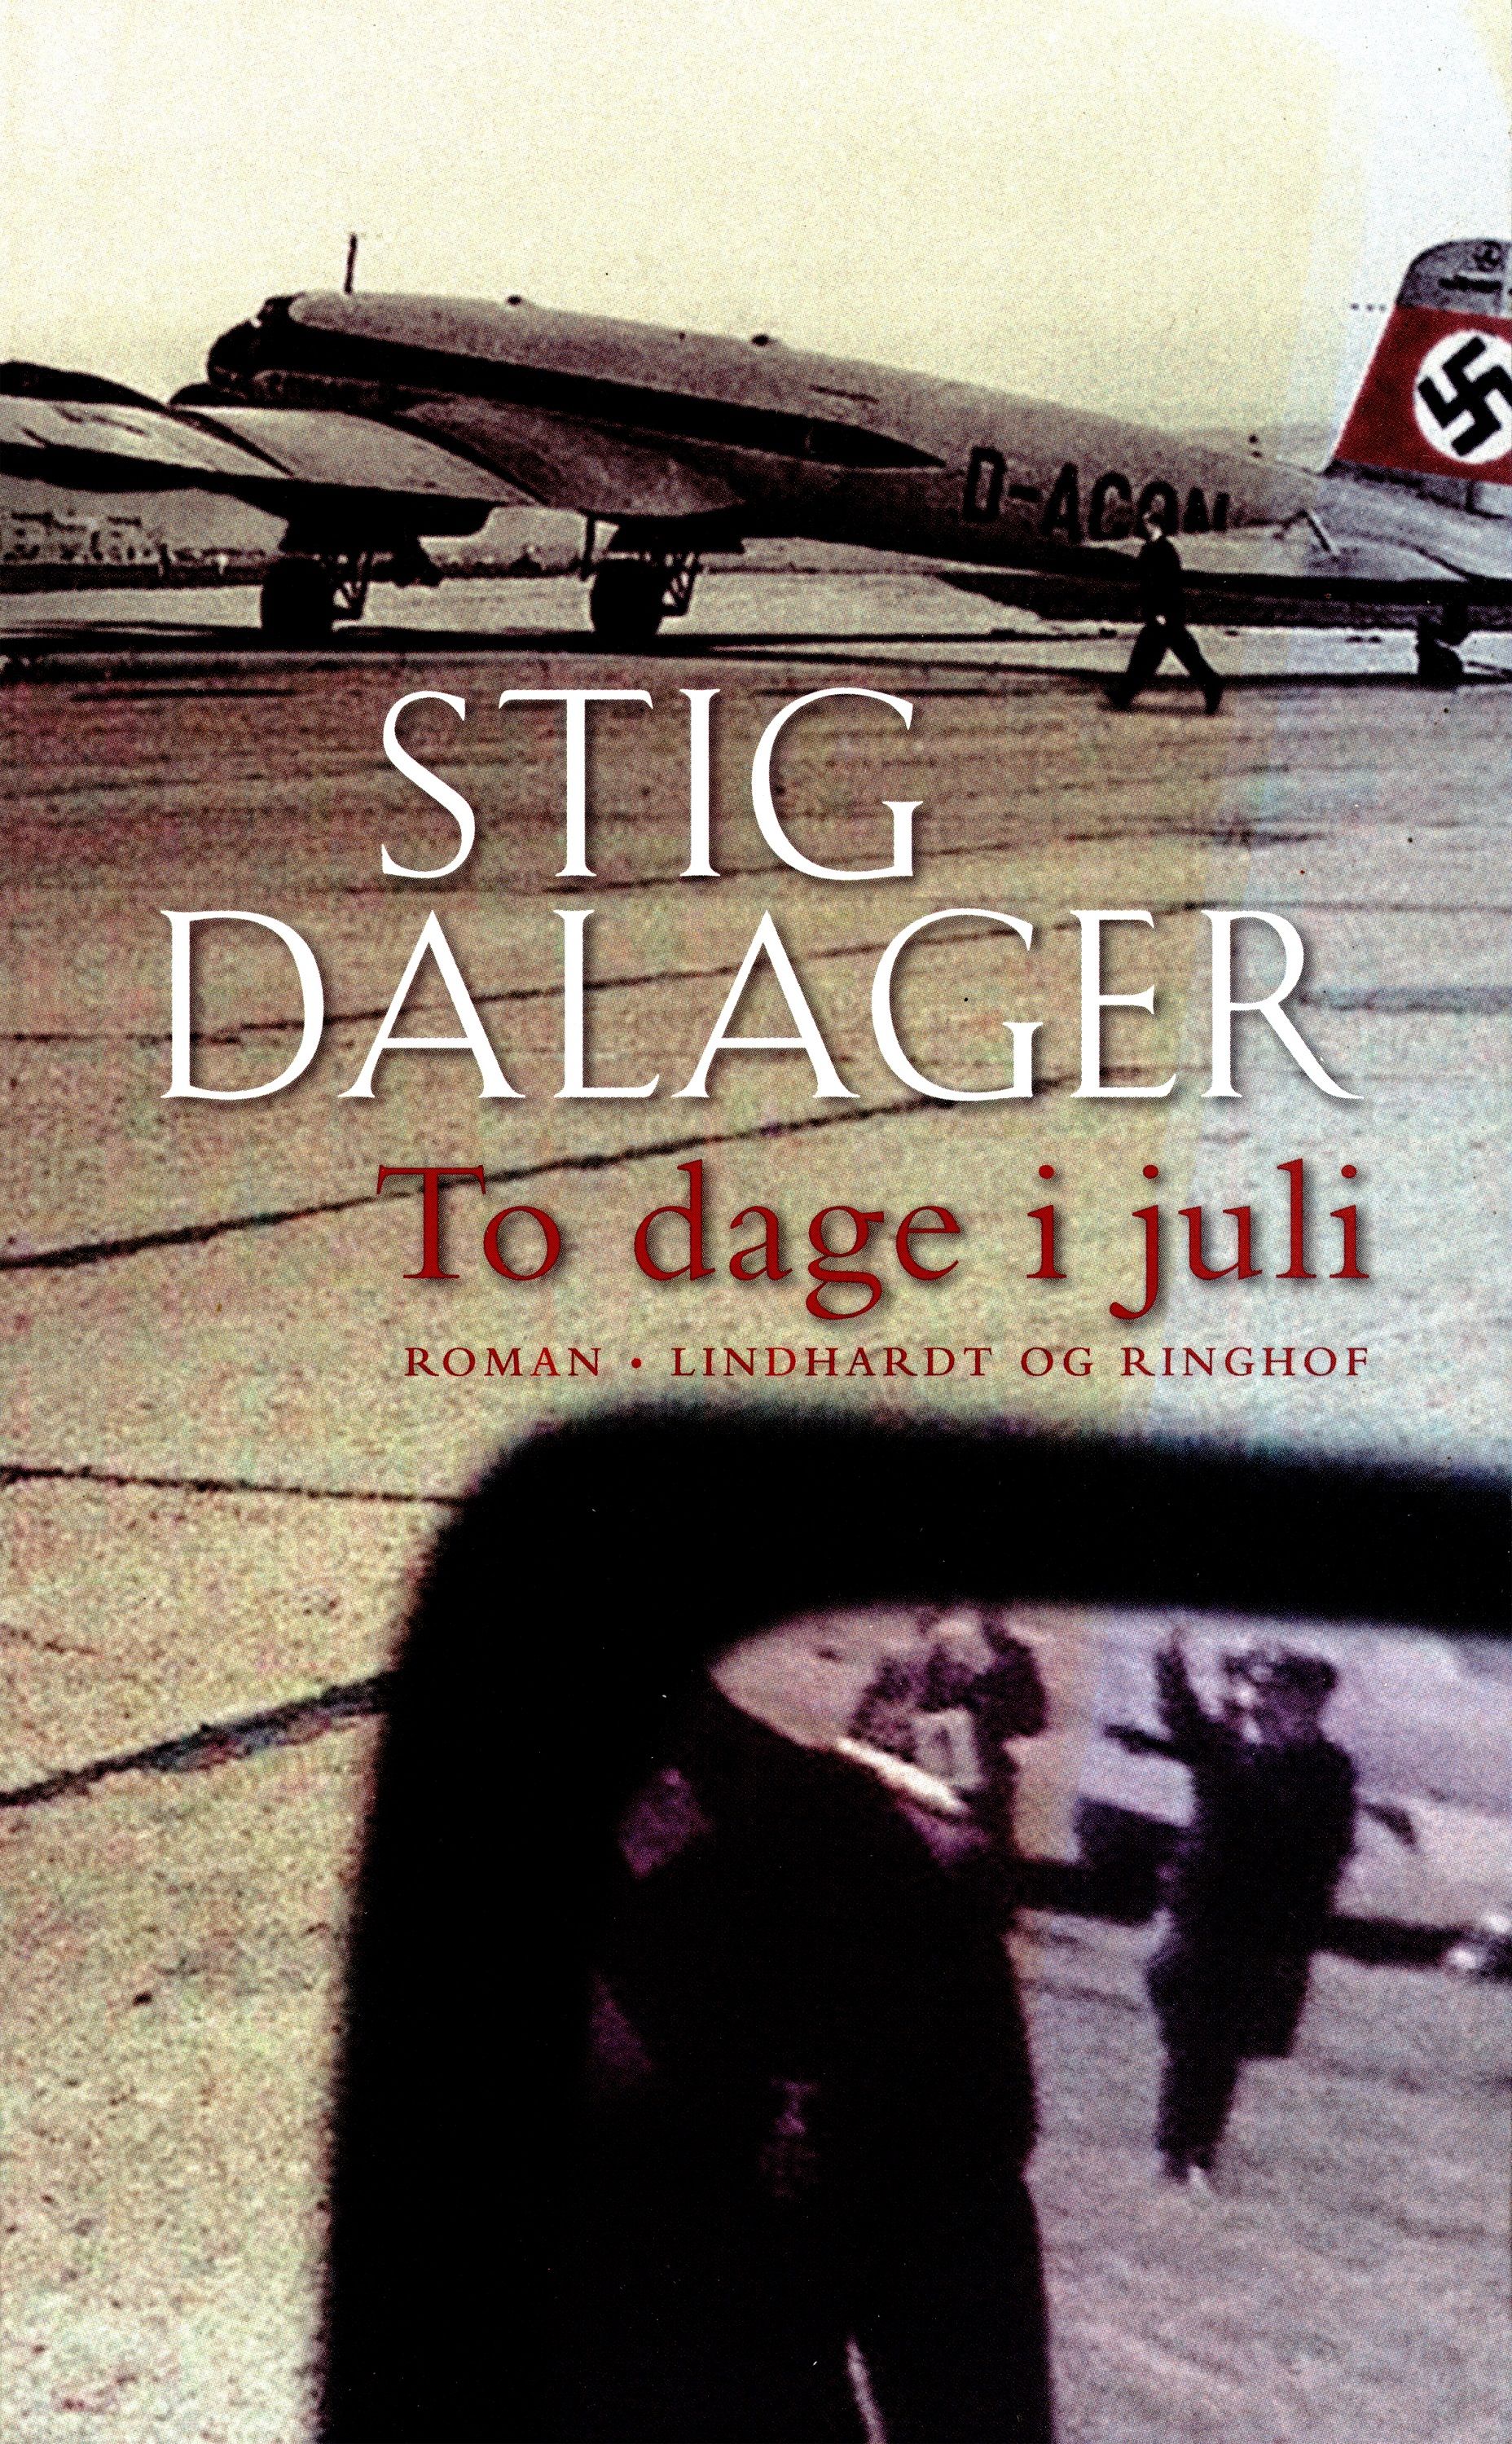 To dage i juli, ljudbok av Stig Dalager